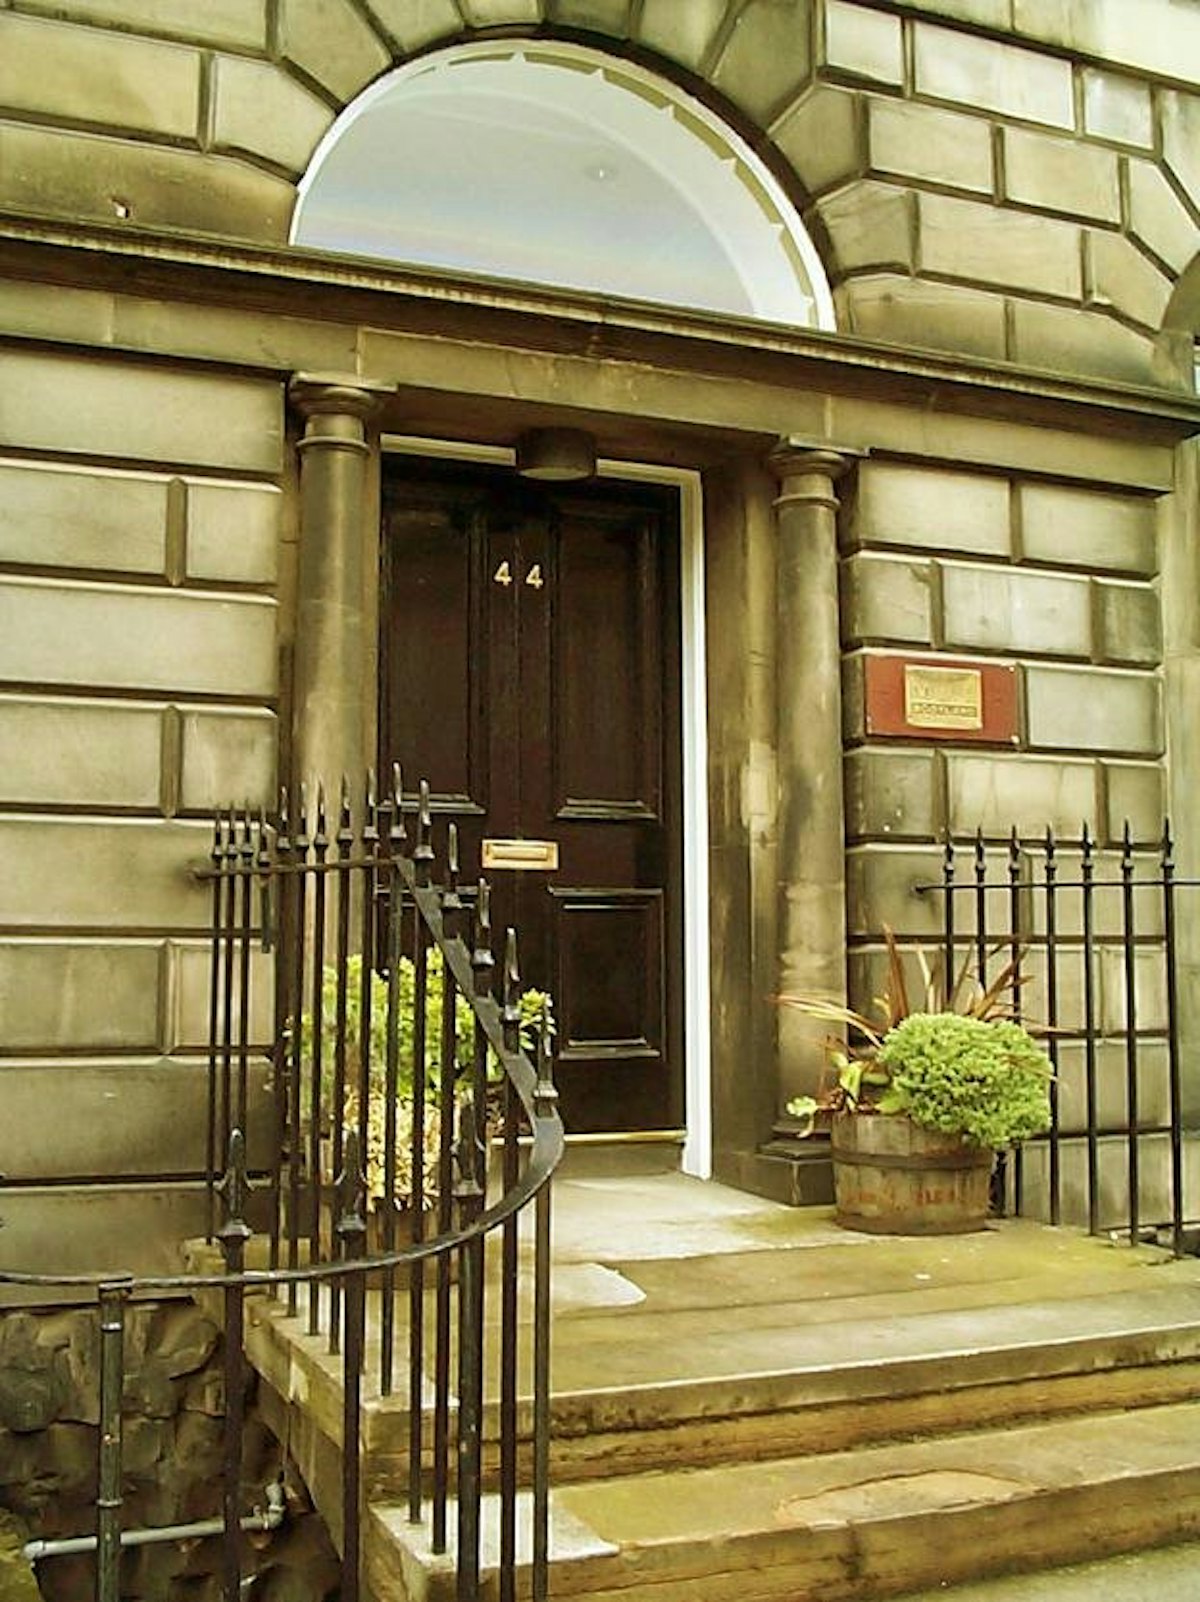 The entrance to the new Baha'i center in Edinburgh, Scotland.